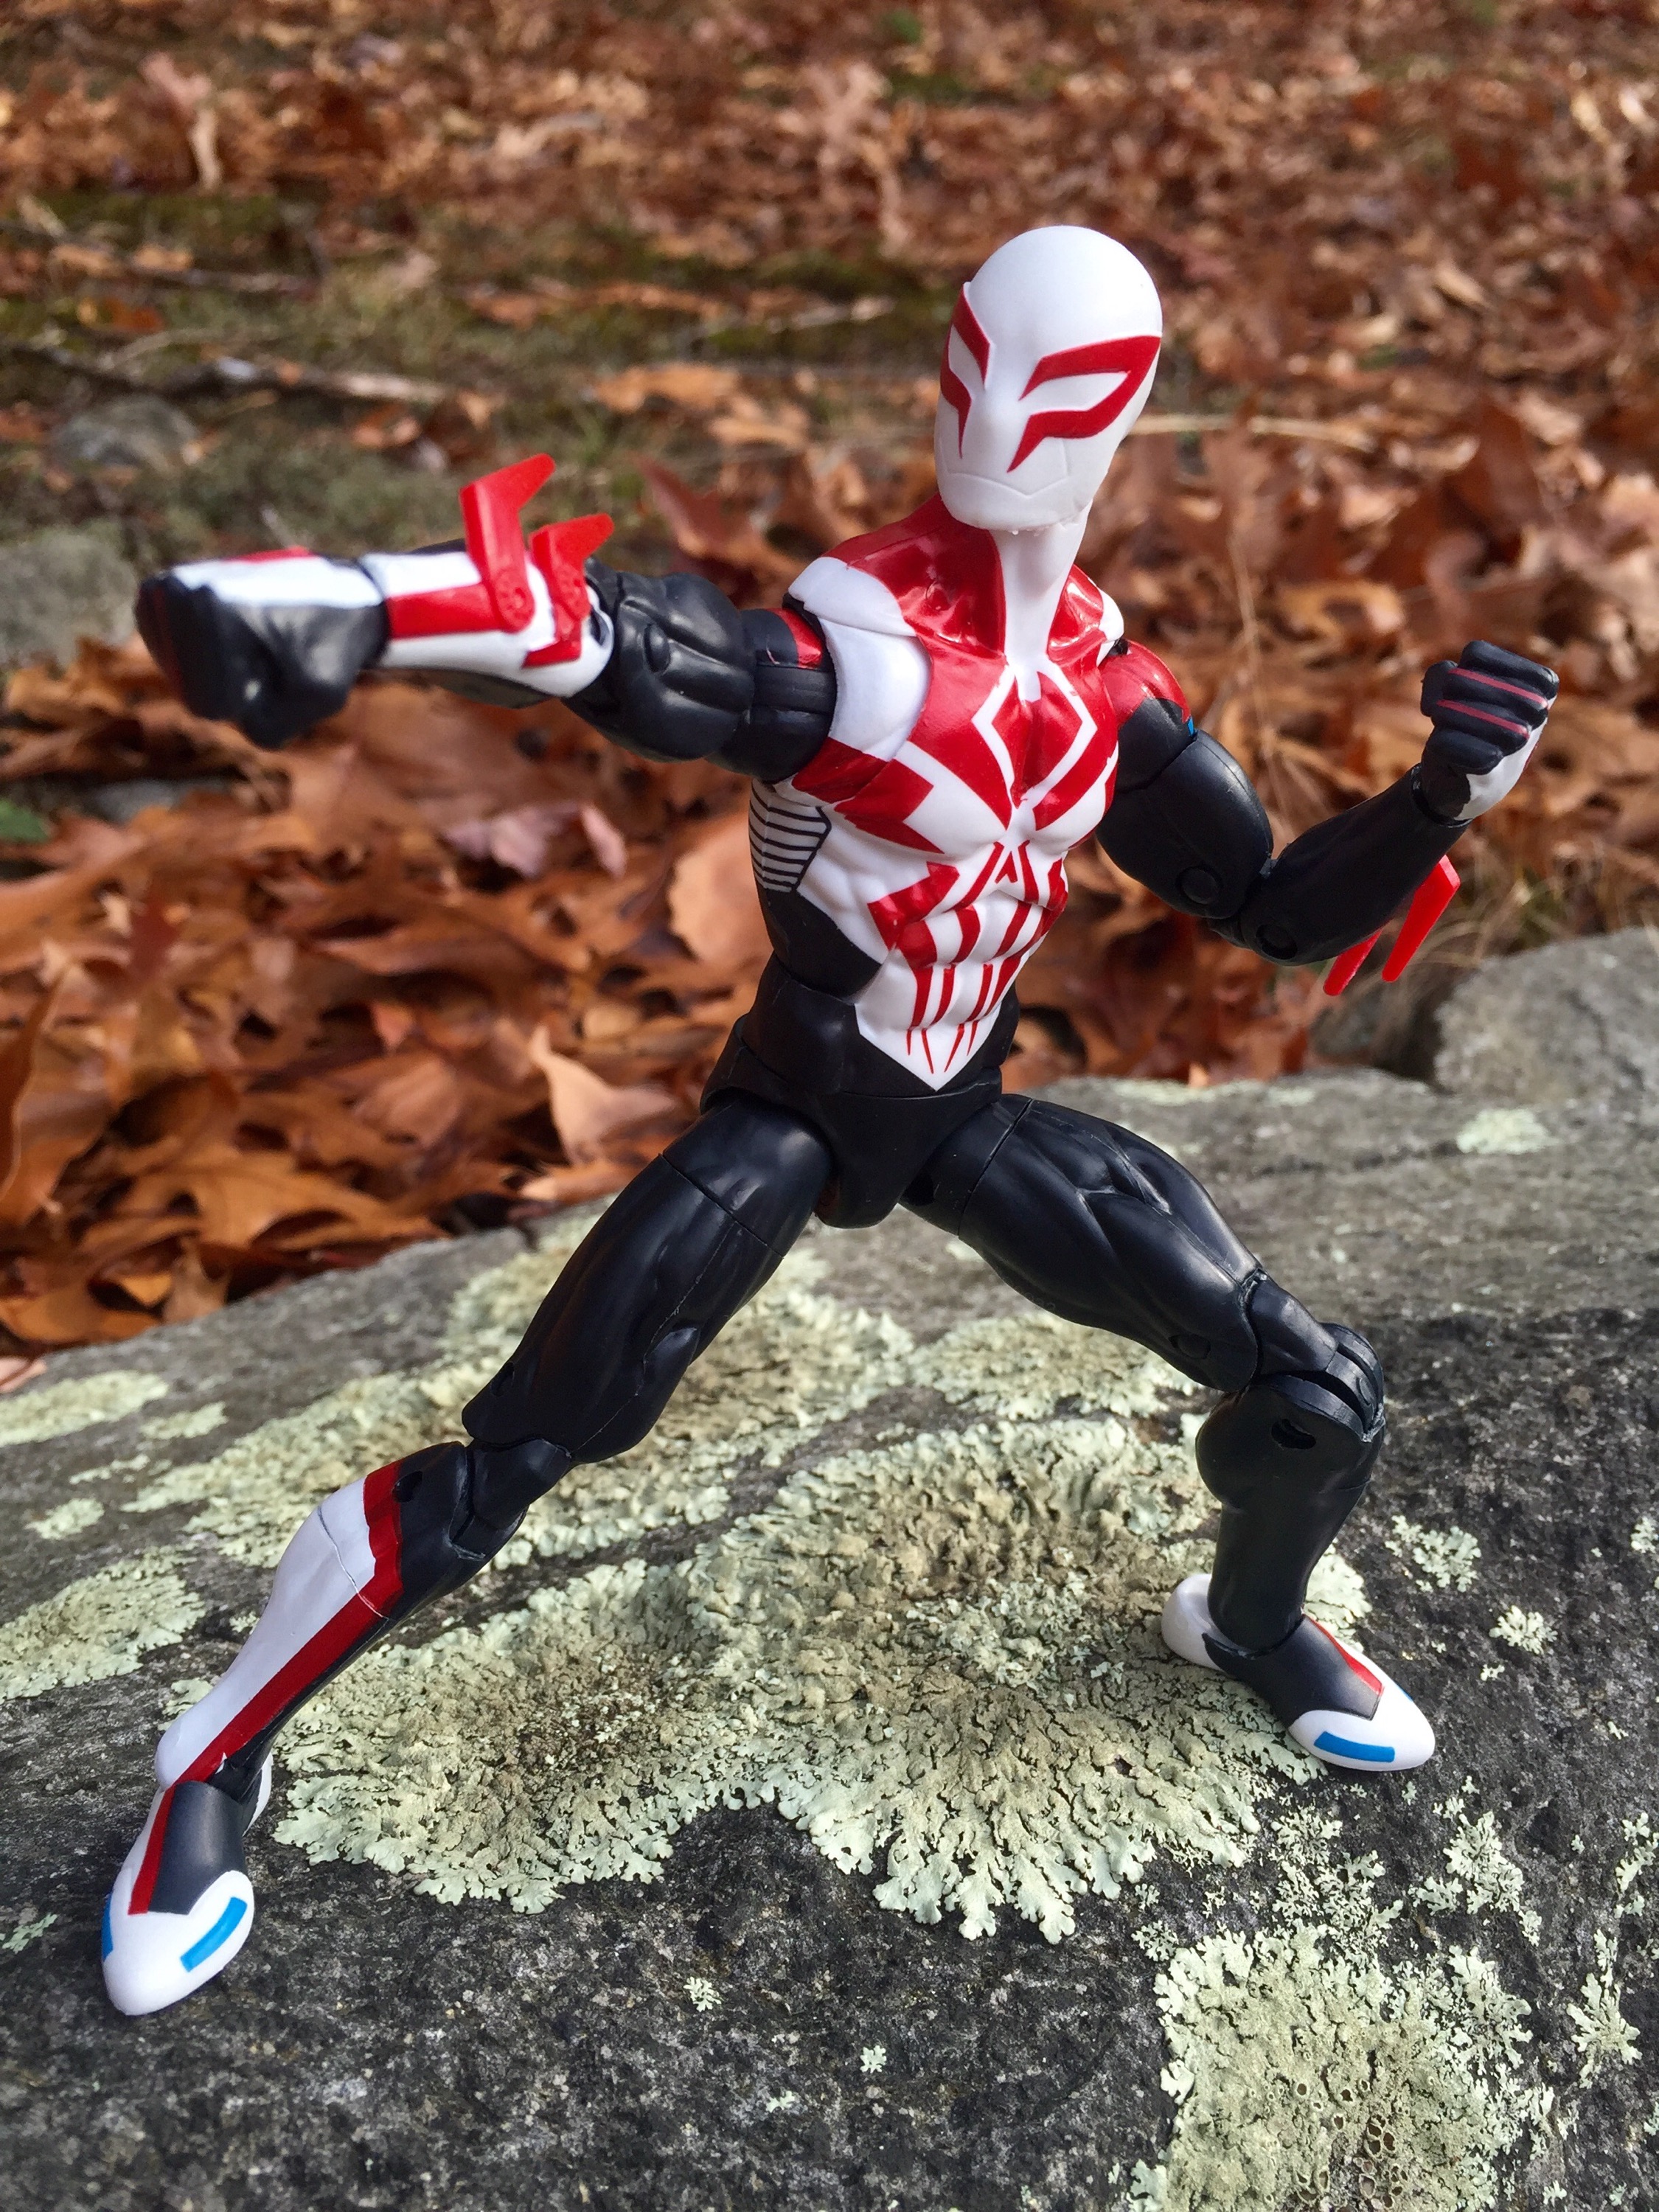 spider man 2099 white suit action figure